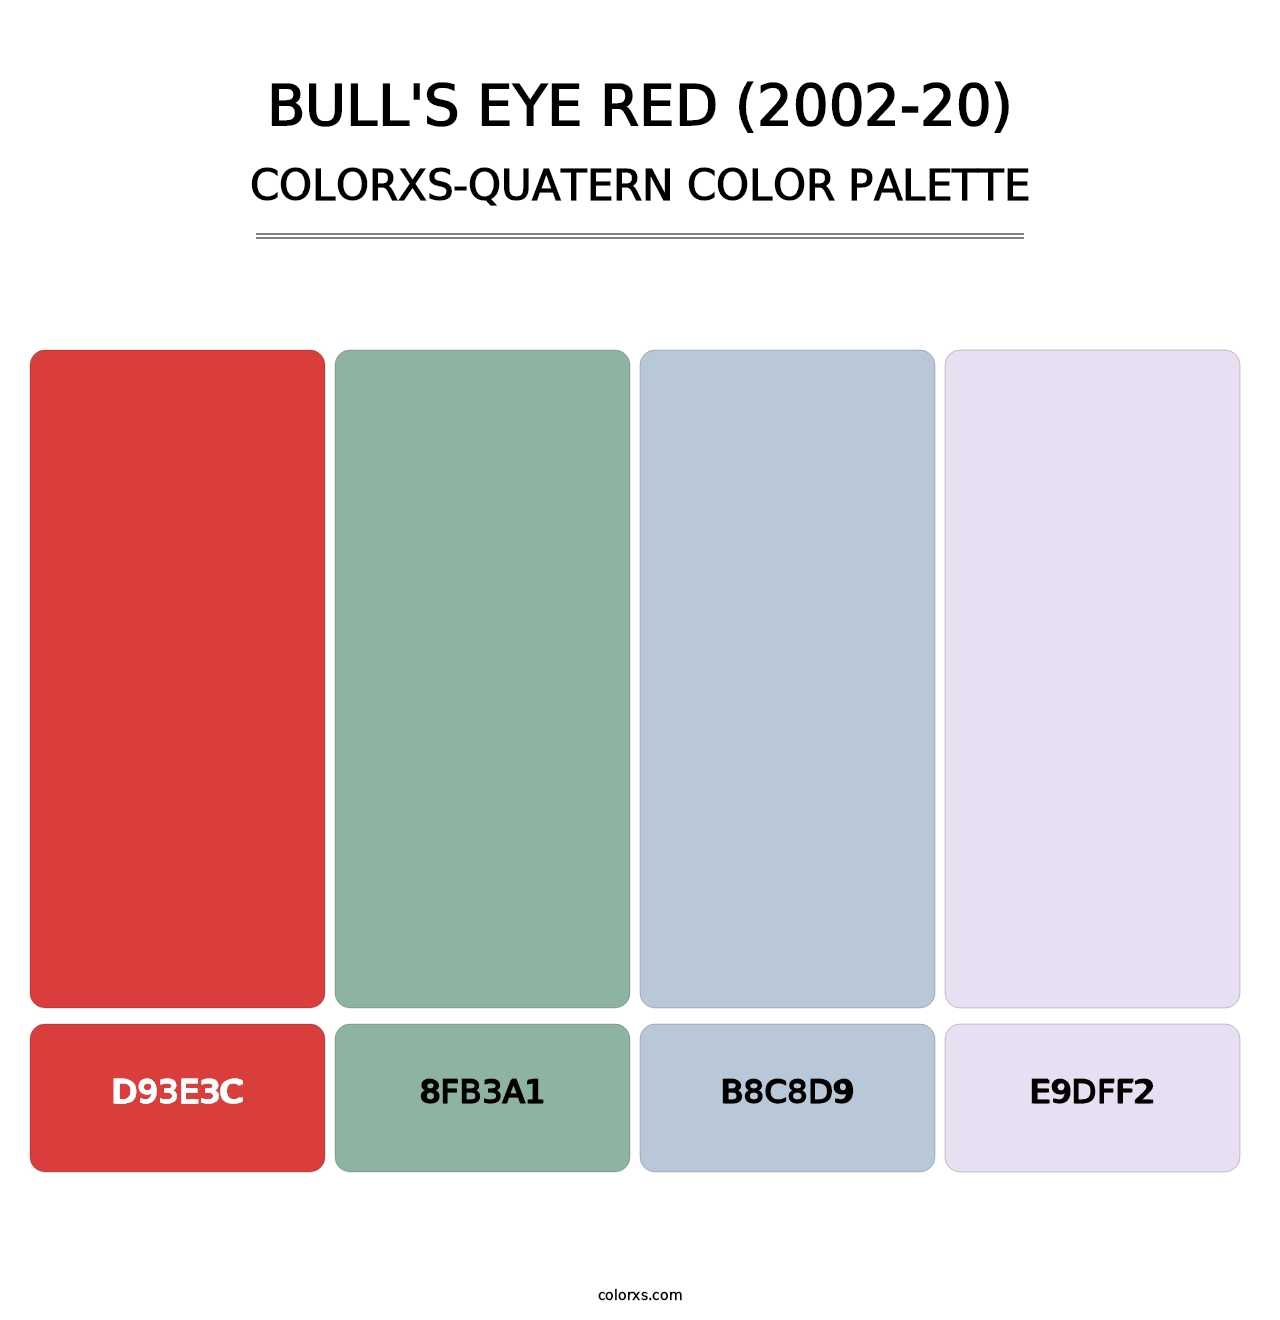 Bull's Eye Red (2002-20) - Colorxs Quatern Palette